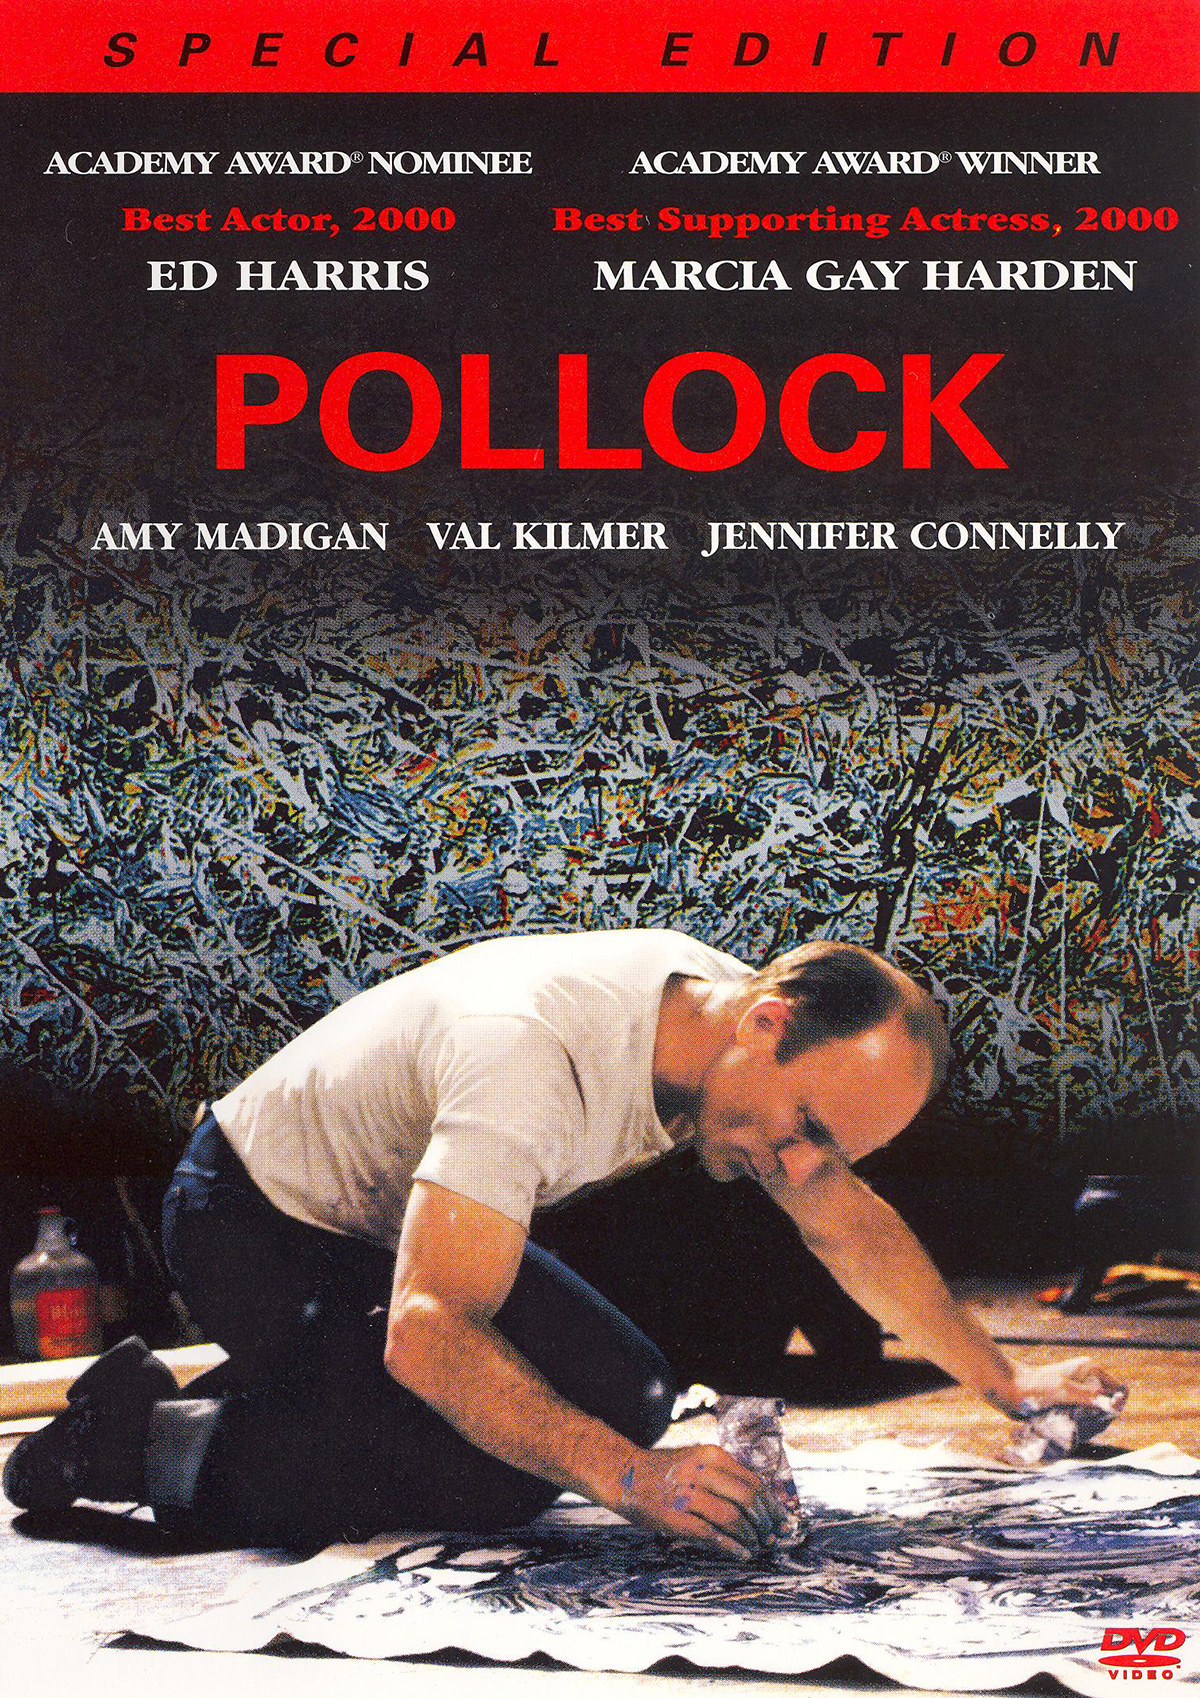 NAGB Film Highlight: Pollock – National Art Gallery of The Bahamas